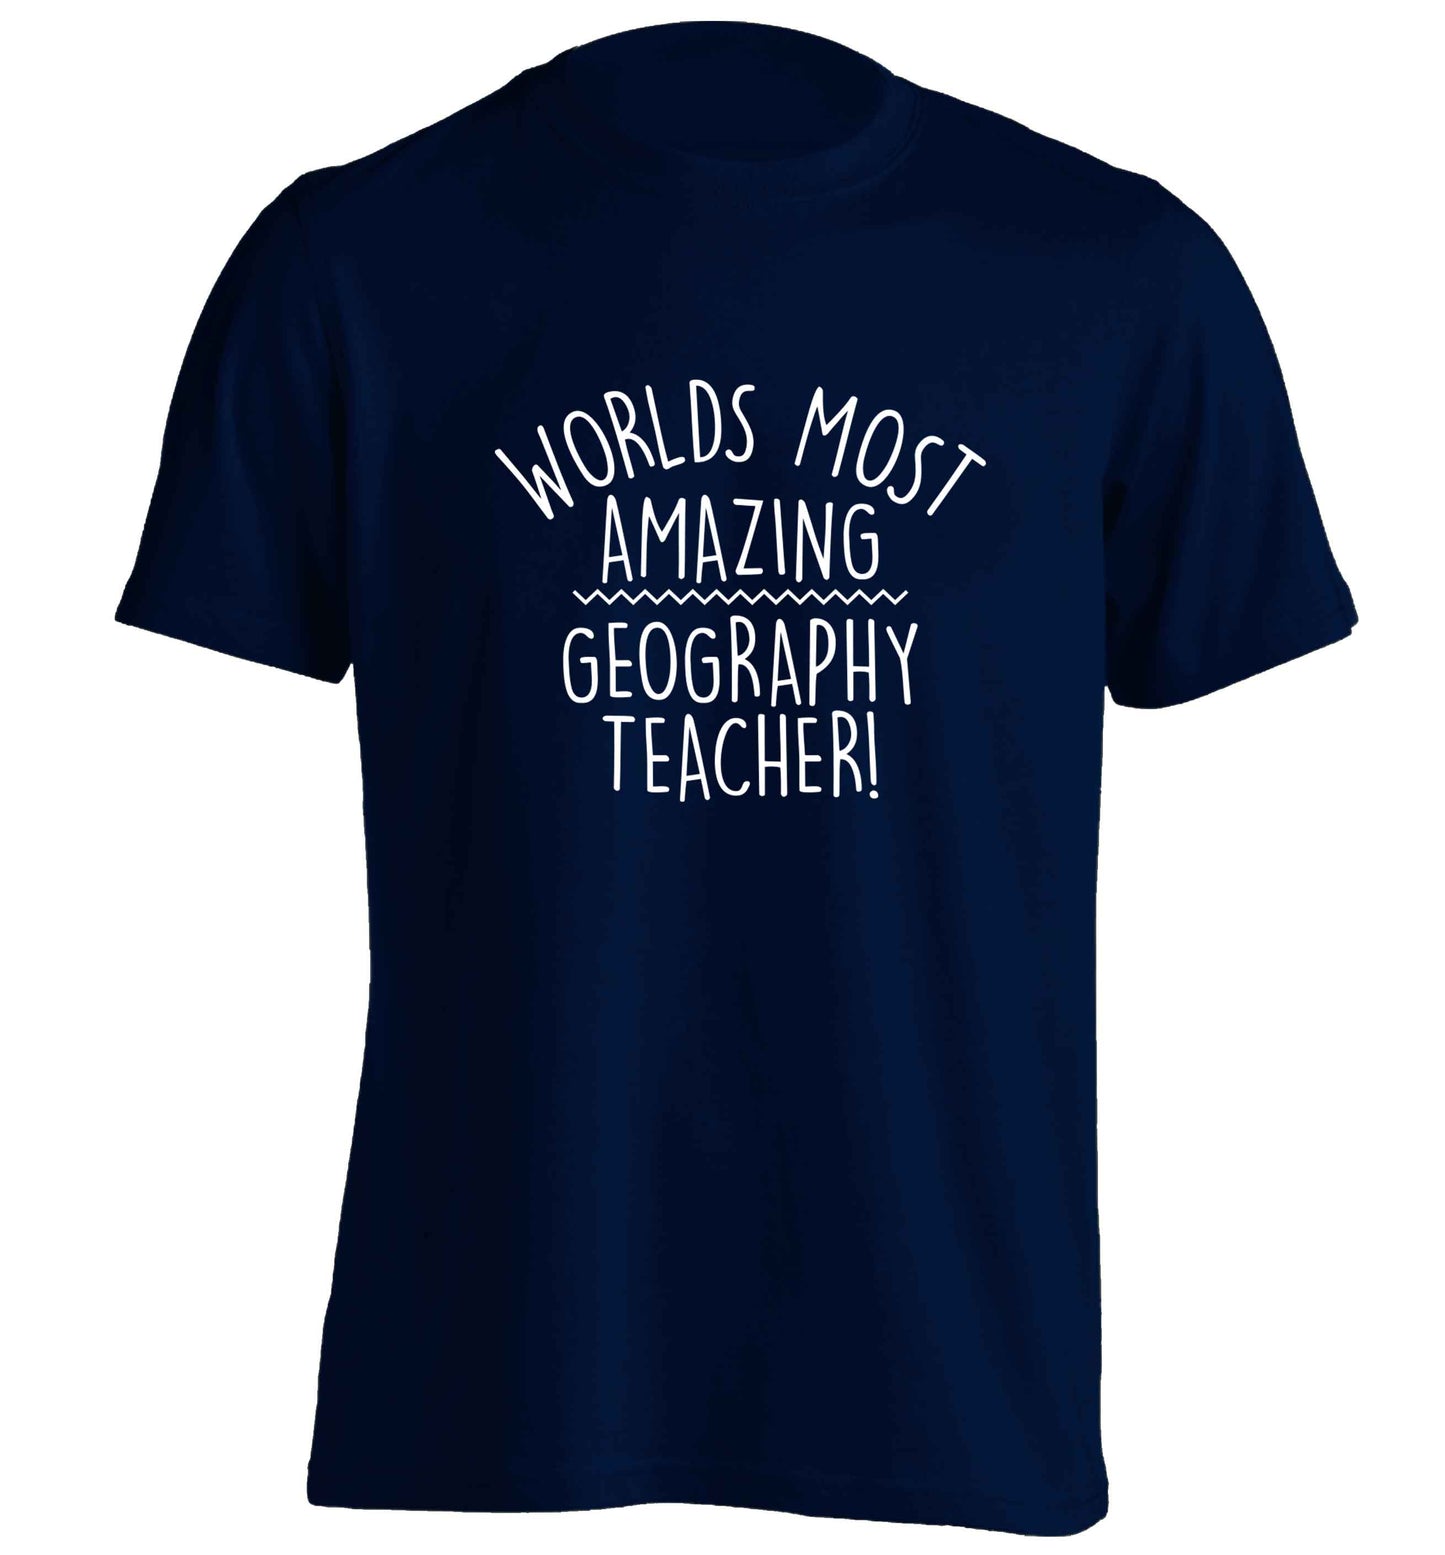 Worlds most amazing geography teacher adults unisex navy Tshirt 2XL